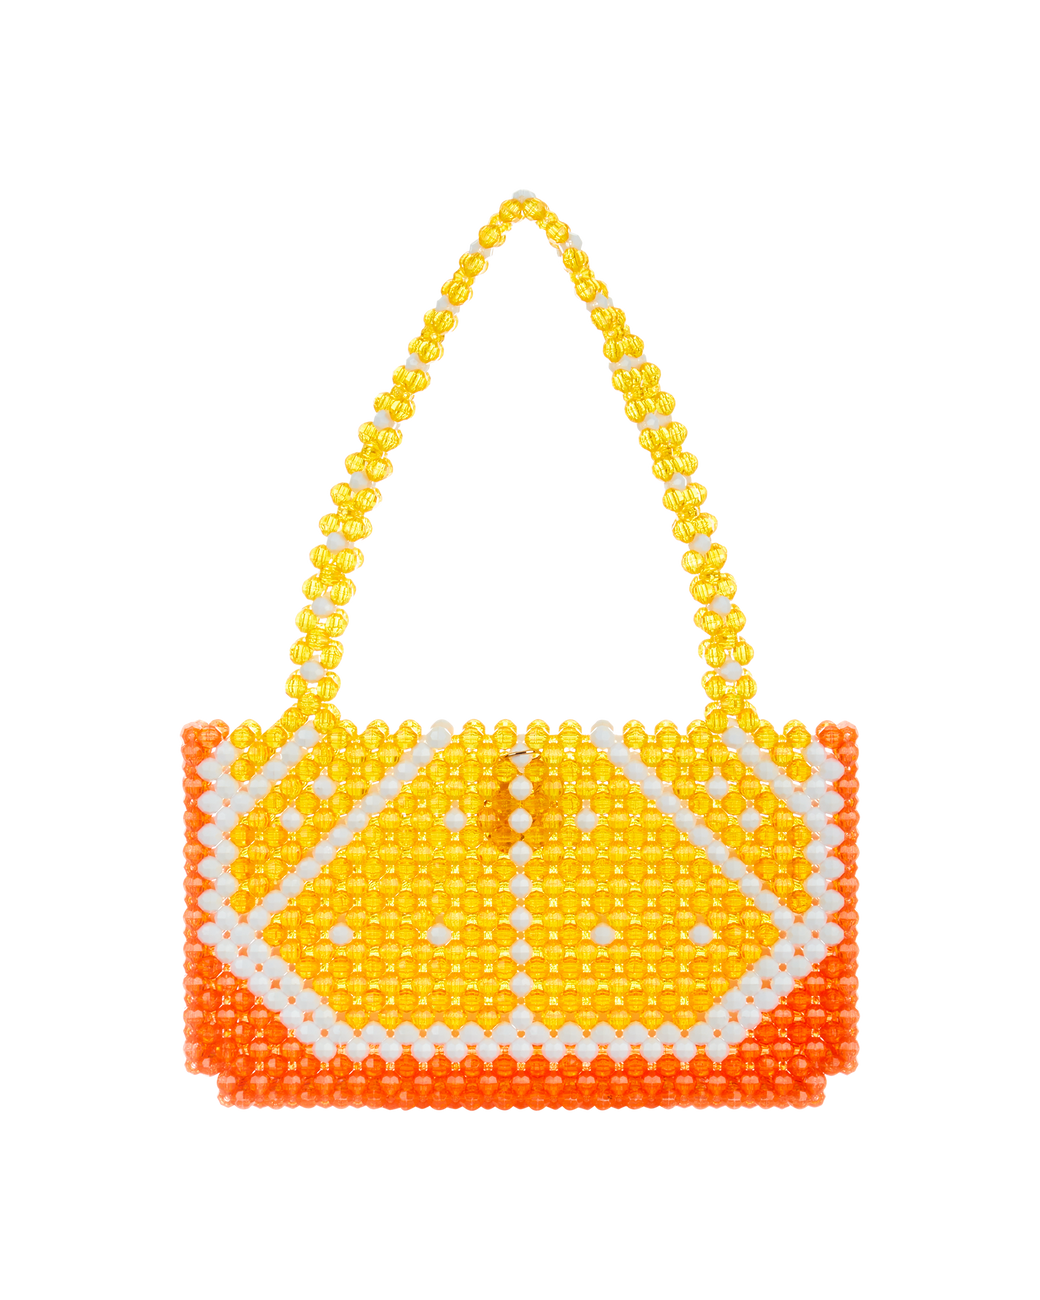 Citrus Bag